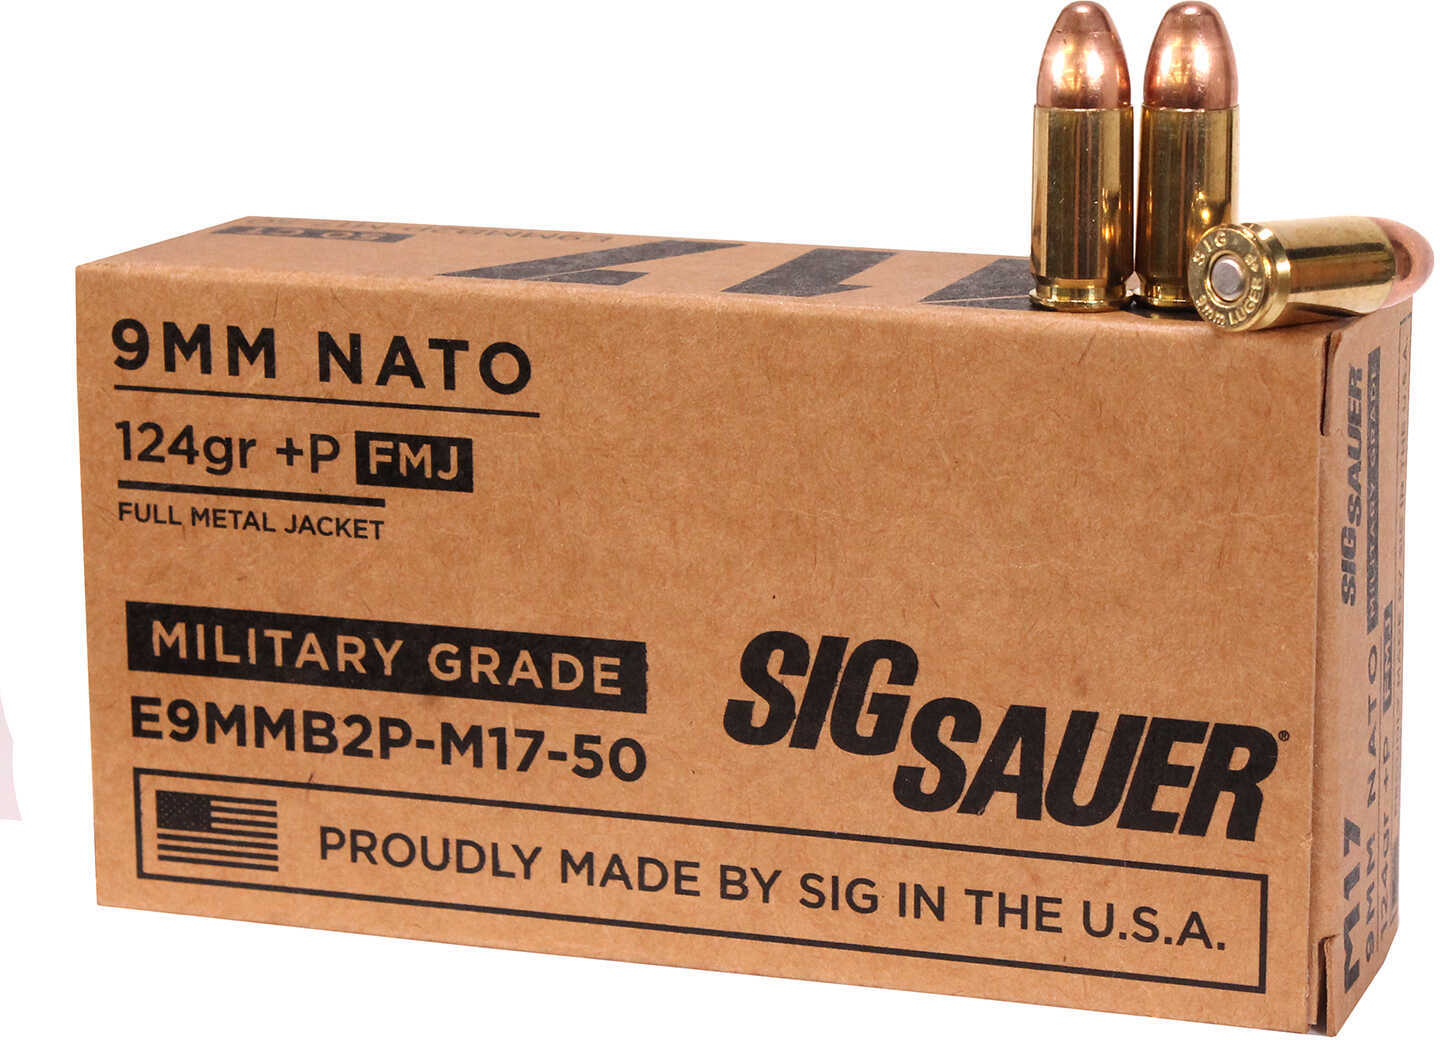 9mm Luger 124 Grain Full Metal Jacket 50 Rounds Sig Sauer Ammunition